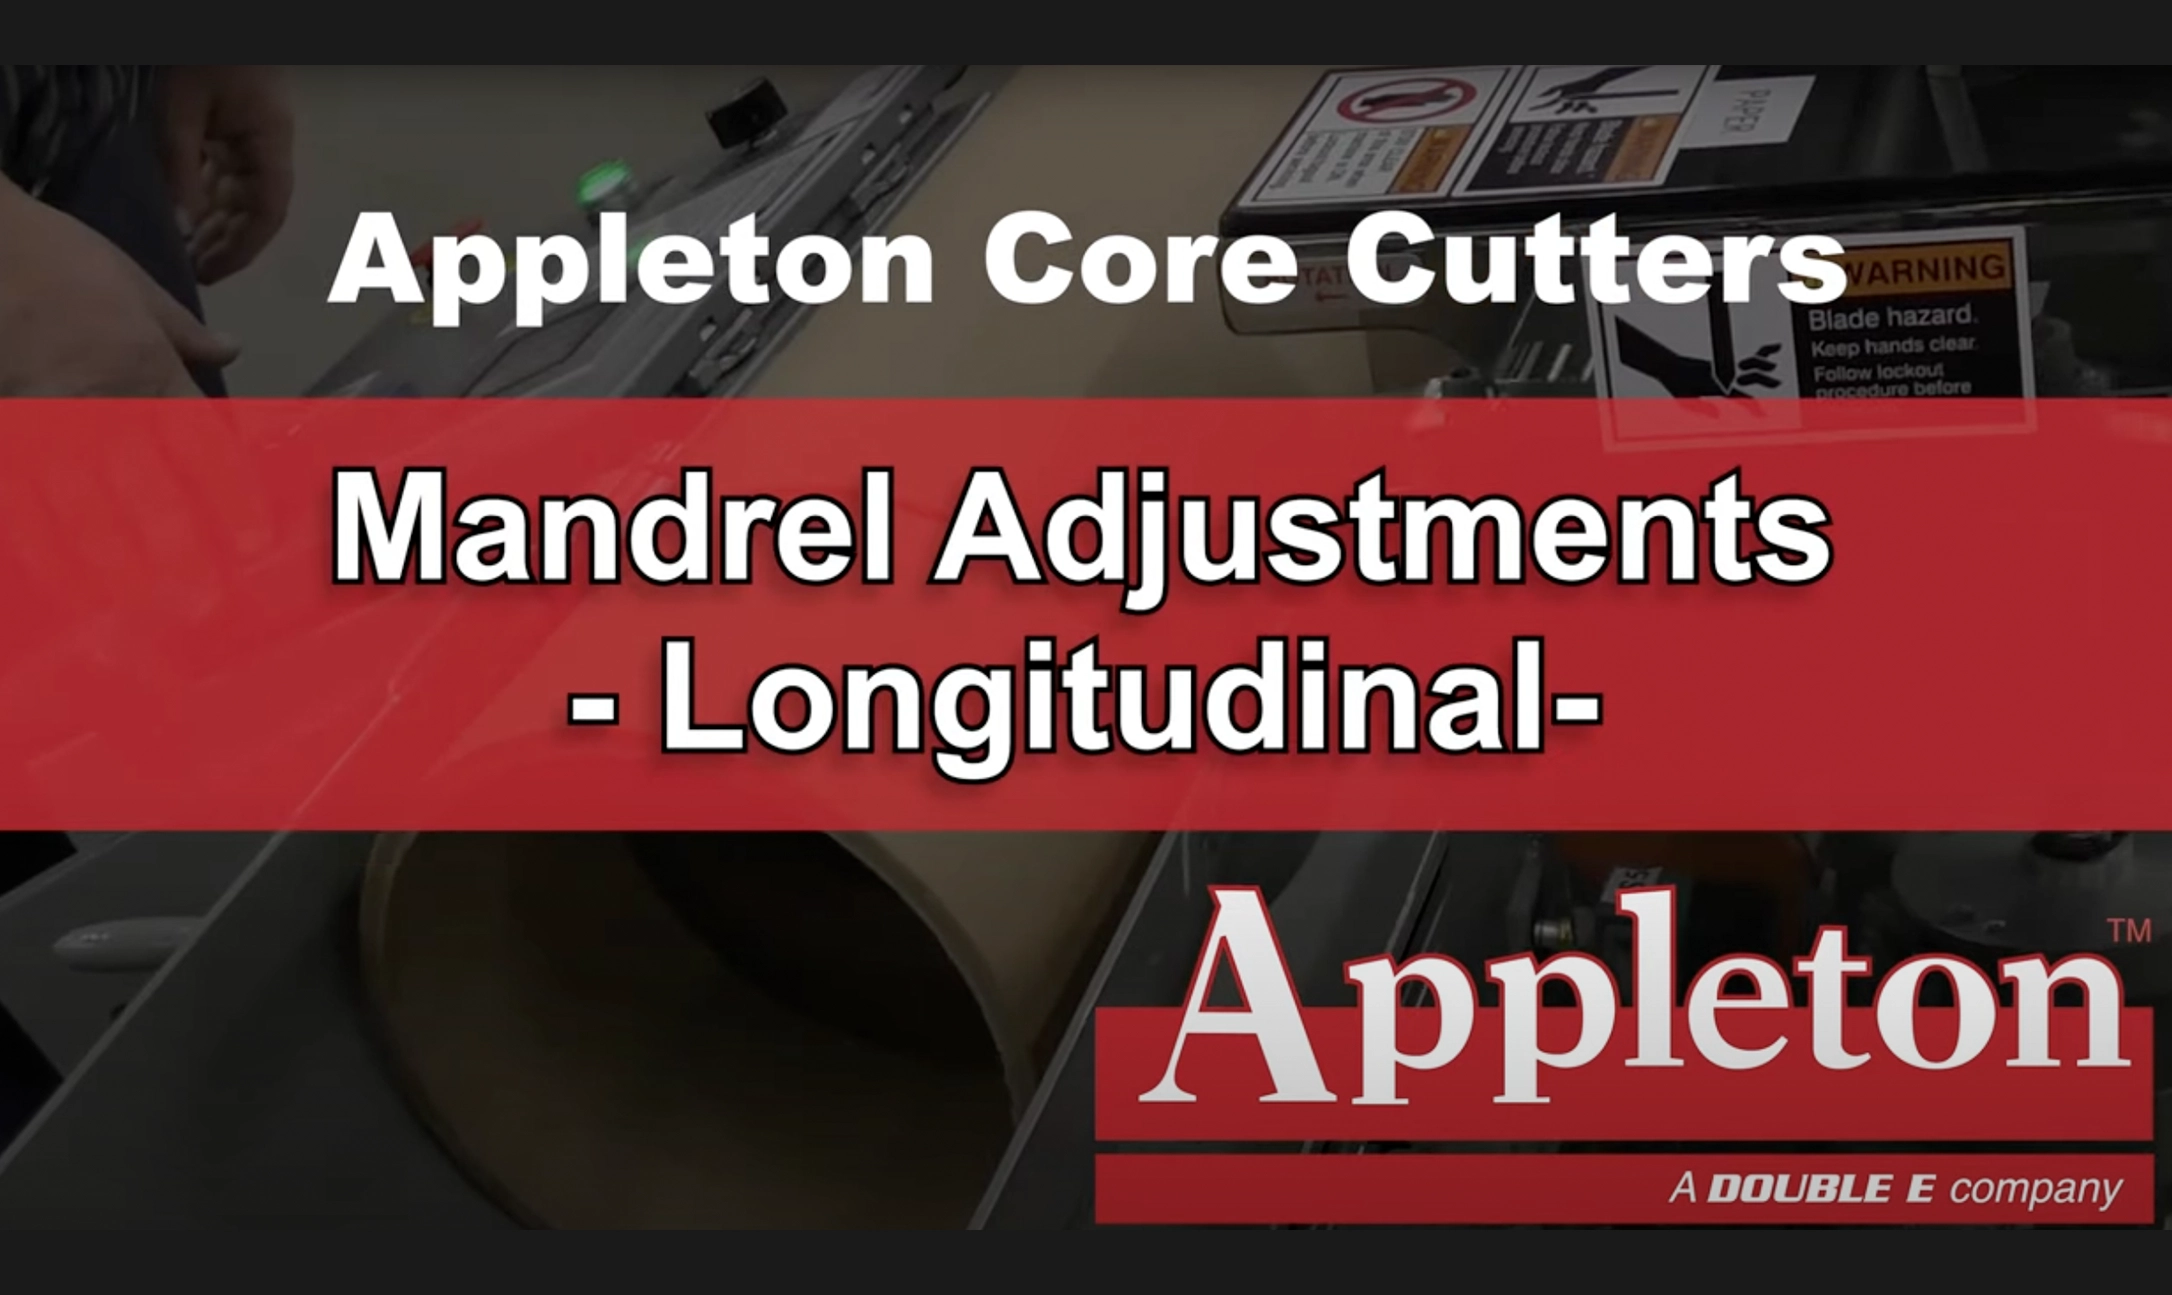 Mandrel Adjustments - Longitudinal